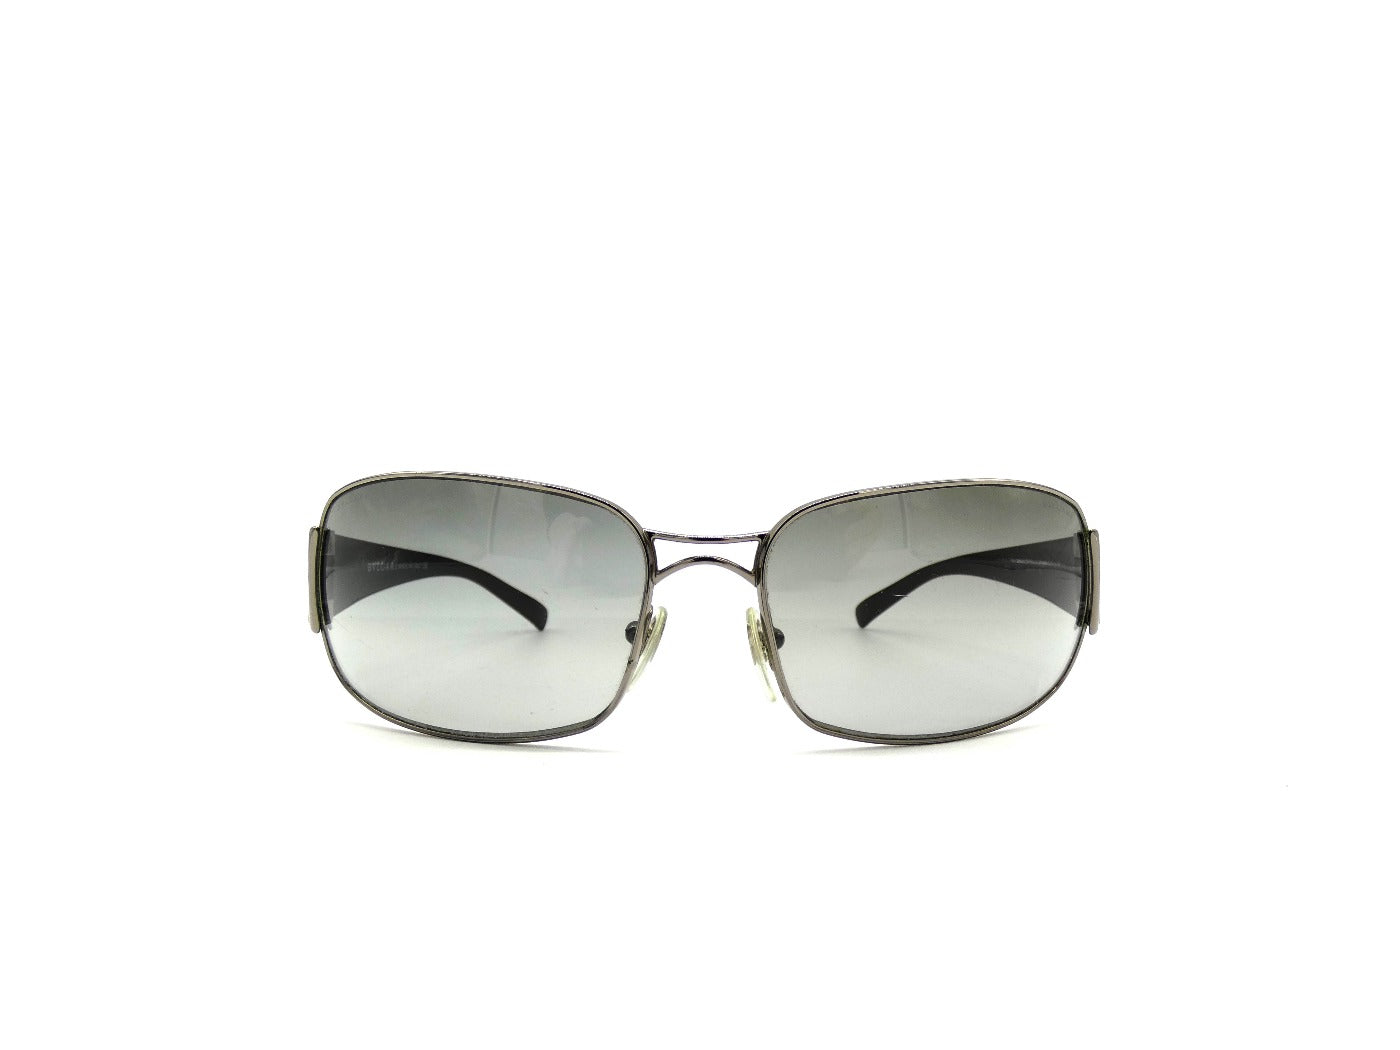 Bvlgari Black and Silver Sunglasses 554 Sunglasses Bvlgari